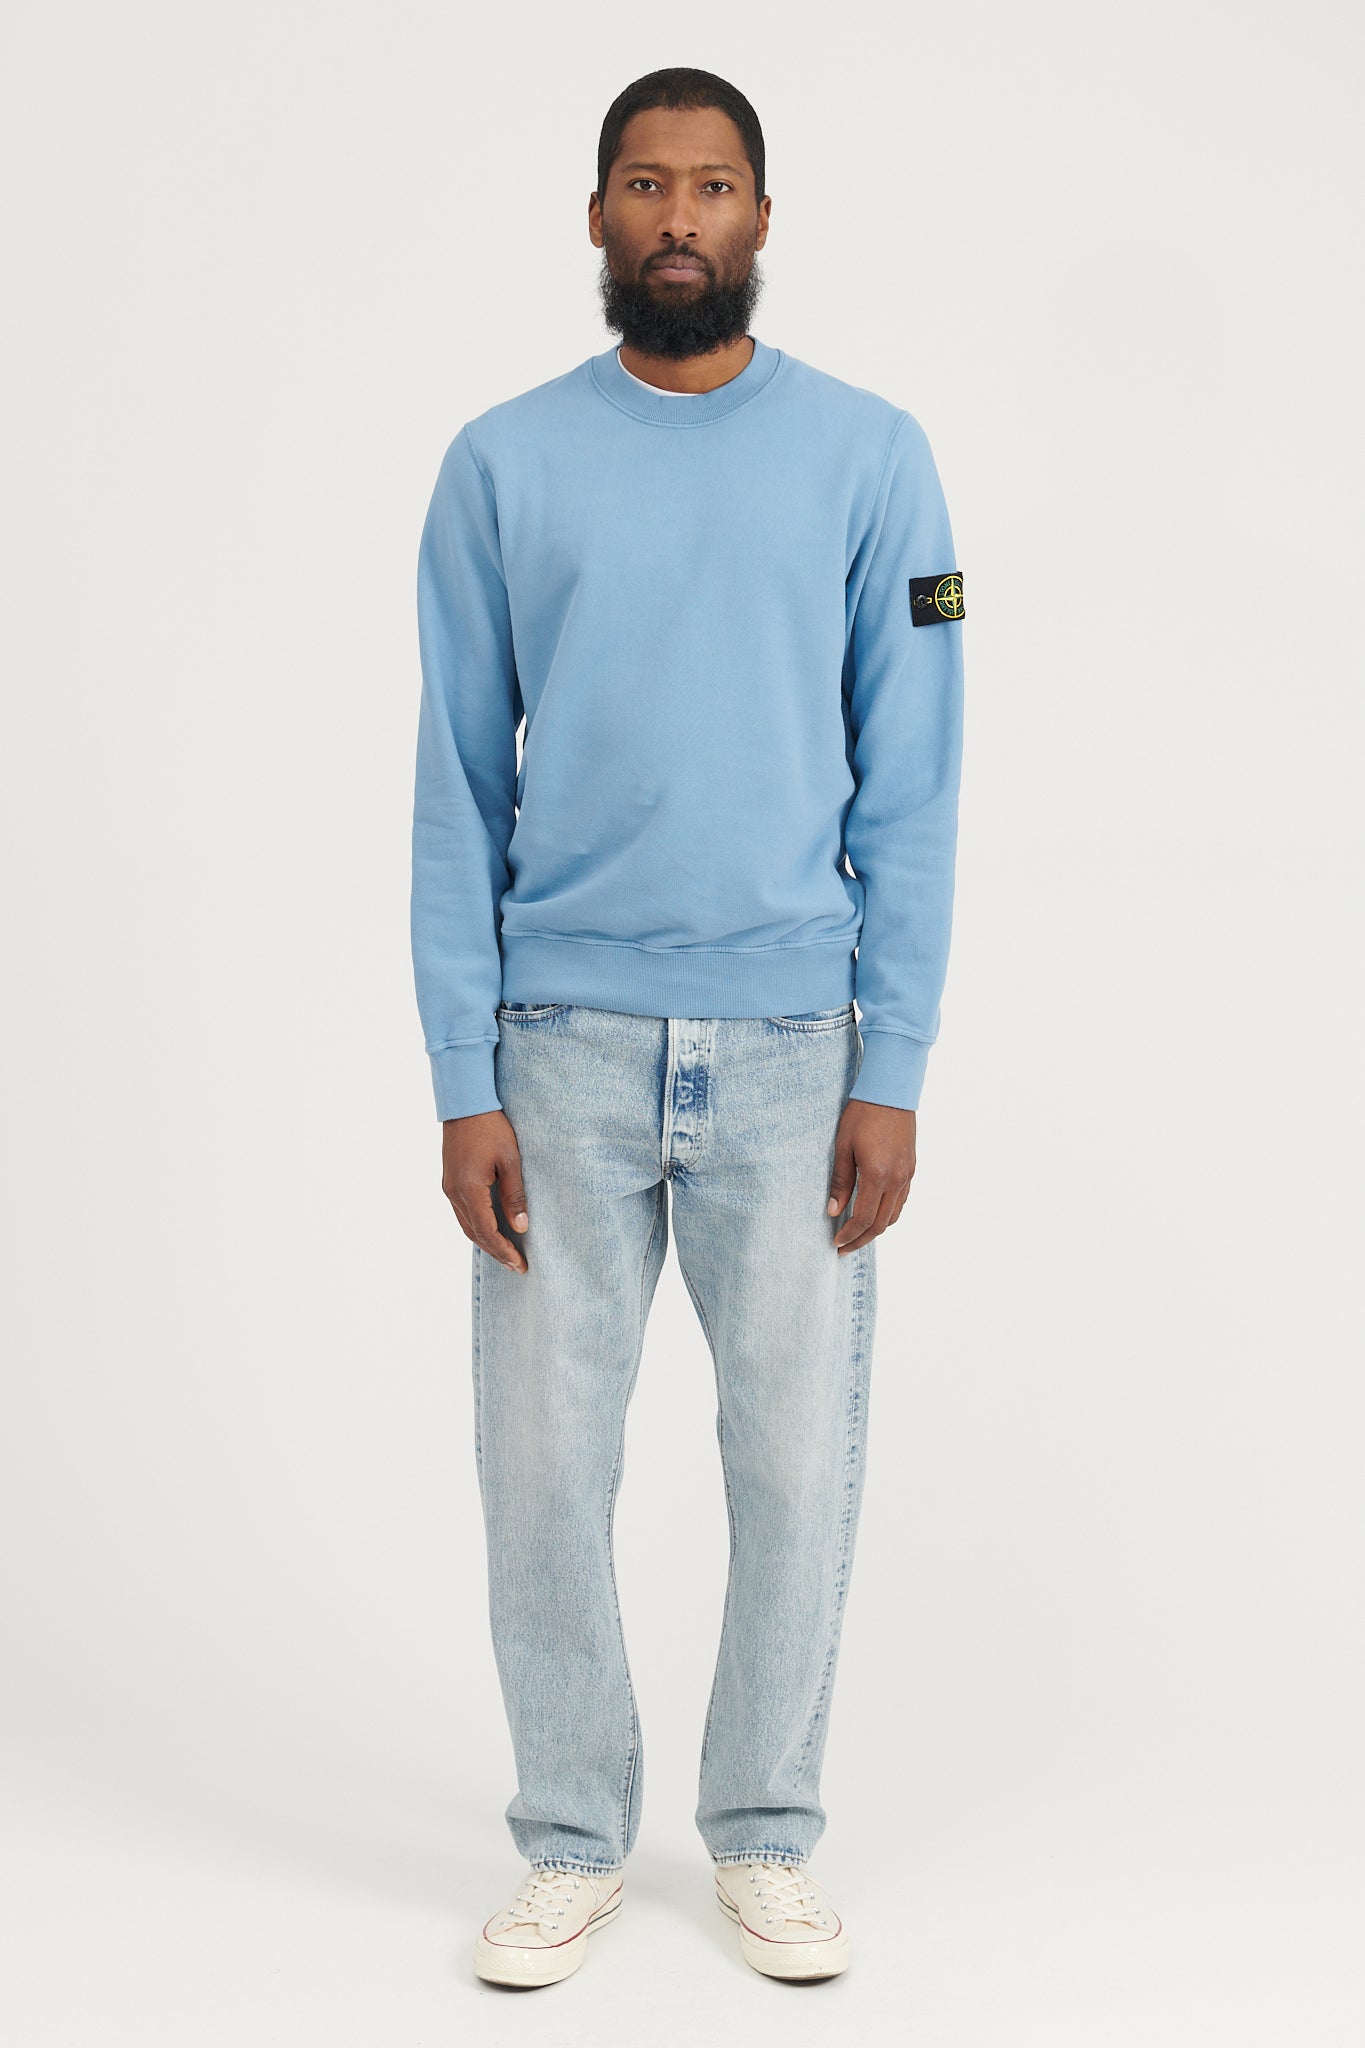 63020 Brushed Cotton Fleece Crewneck Sweatshirt - Mid Blue